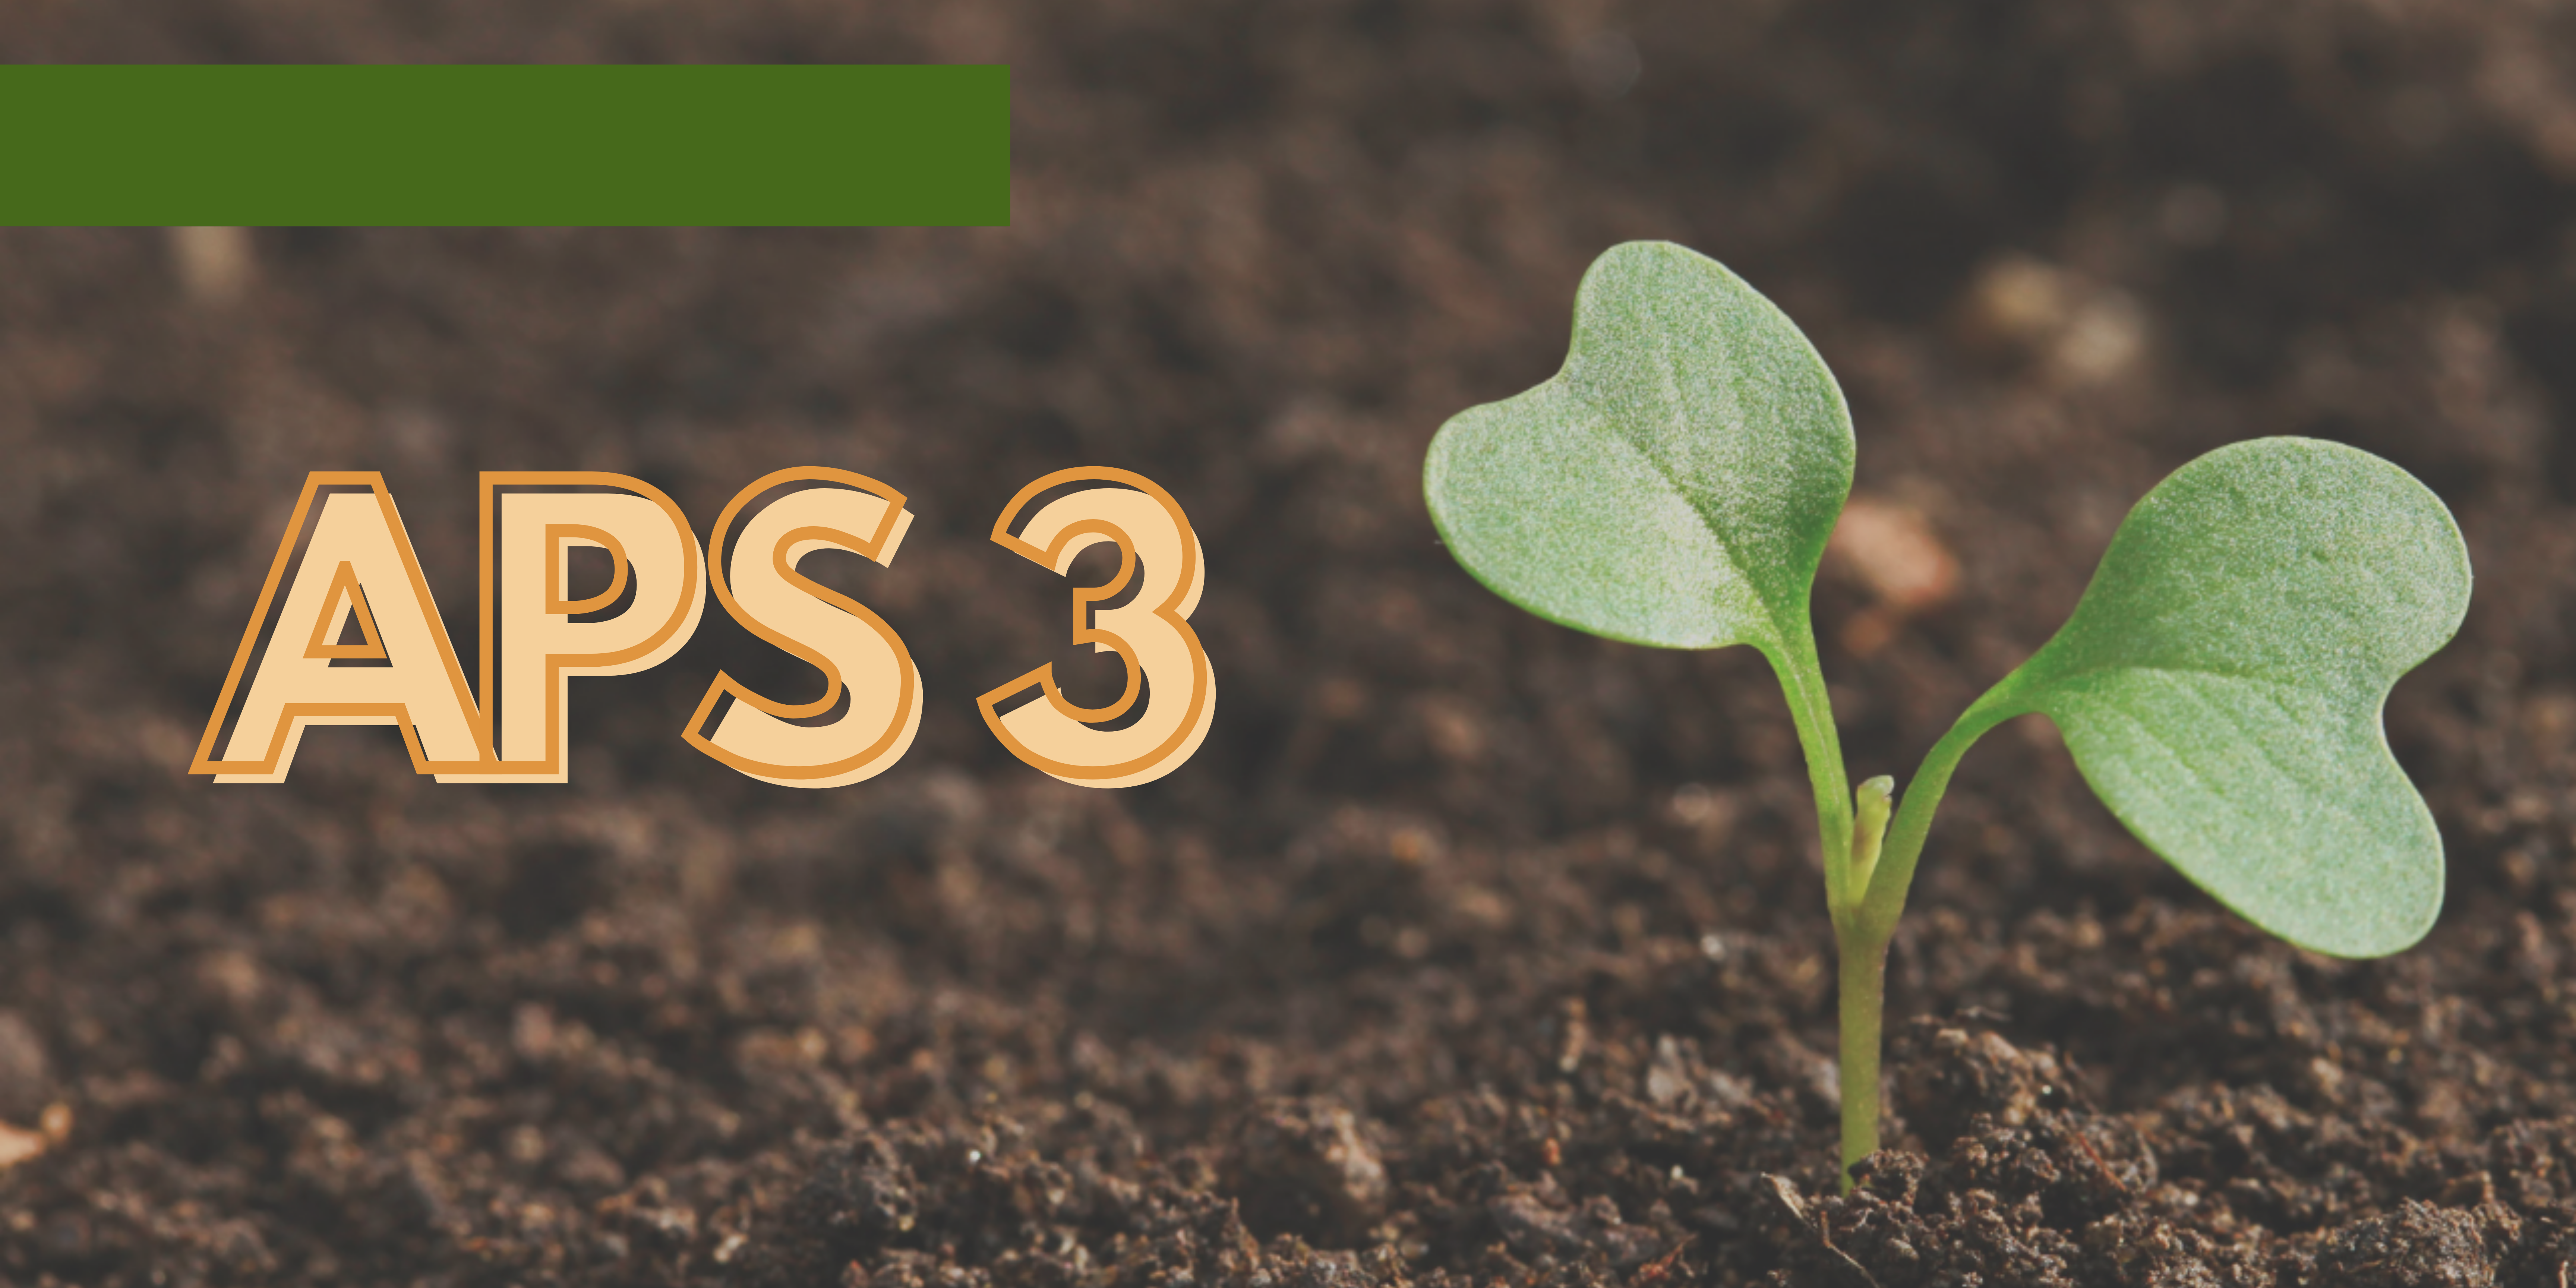 AS 3 - Principle of Soil Science